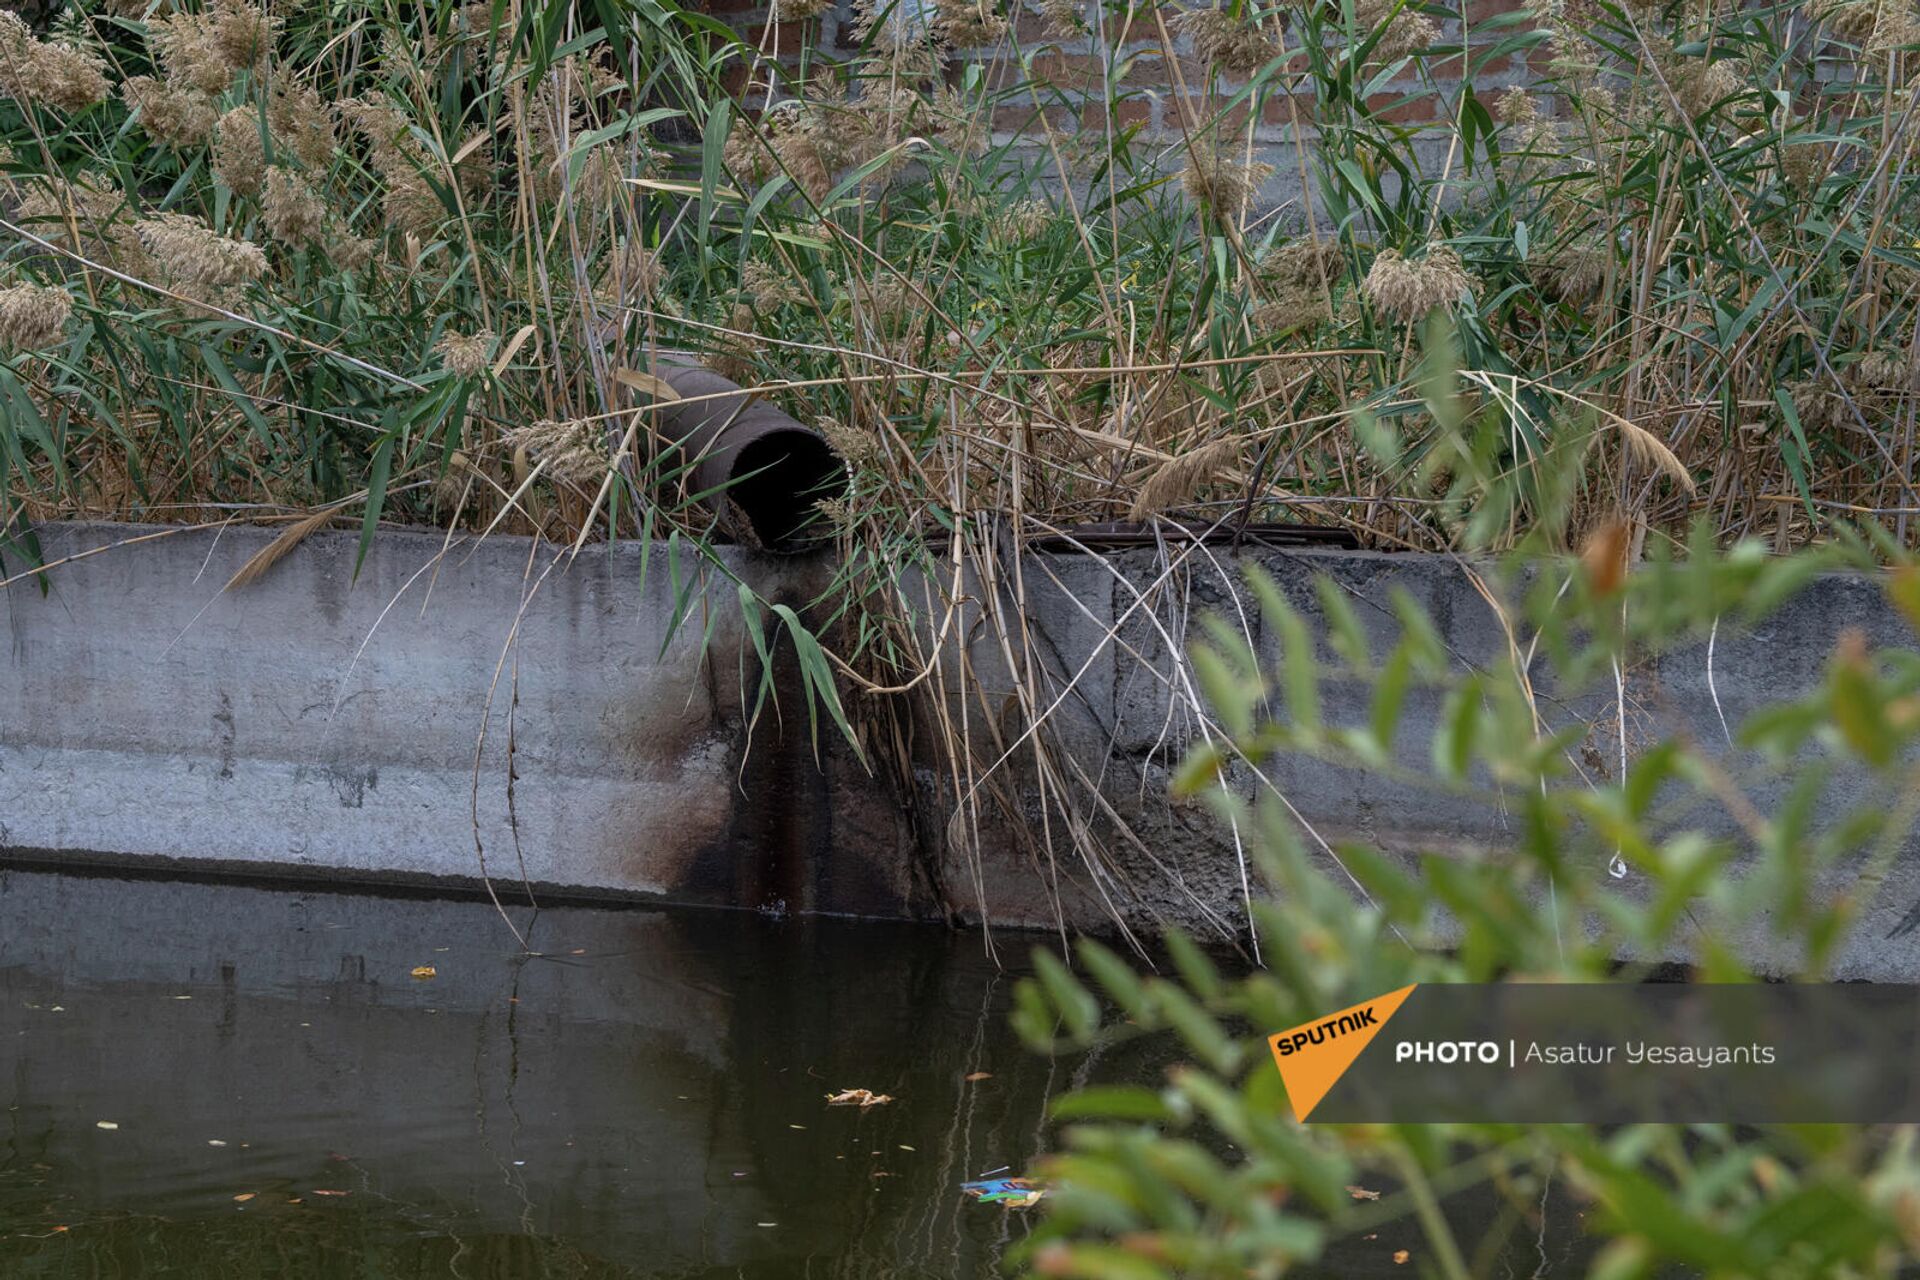 канализационная труба свиновермы Ви Ар Агро вливается в канал - Sputnik Արմենիա, 1920, 05.10.2021